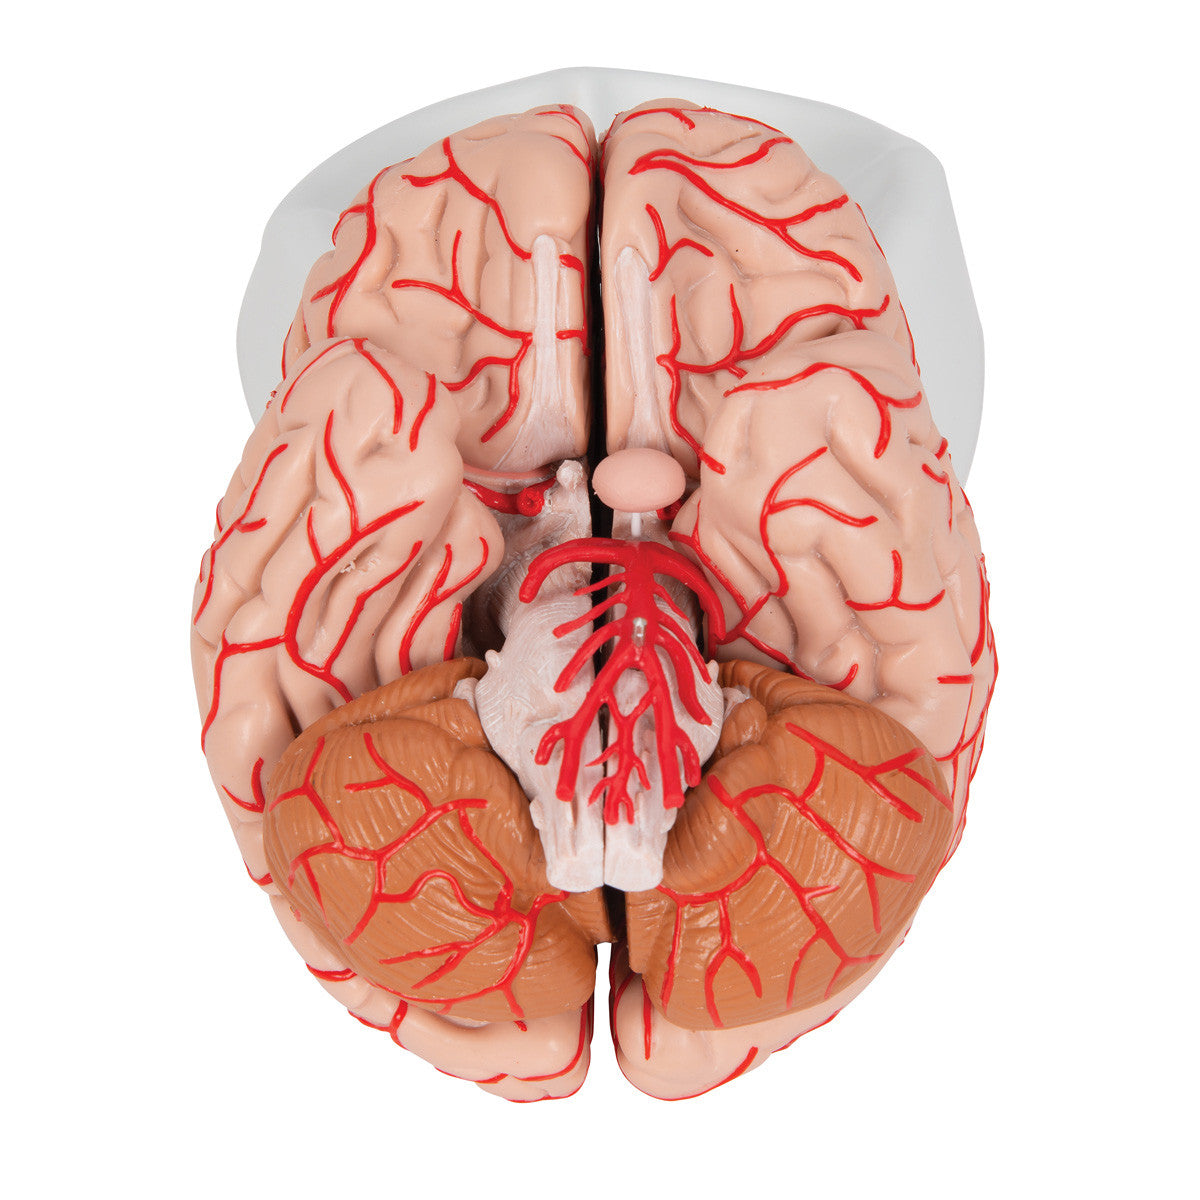 c20_07_1200_1200_human-brain-model-with-arteries-9-part-3b-smart-anatomy__99432.1589753159.1280.1280.jpg